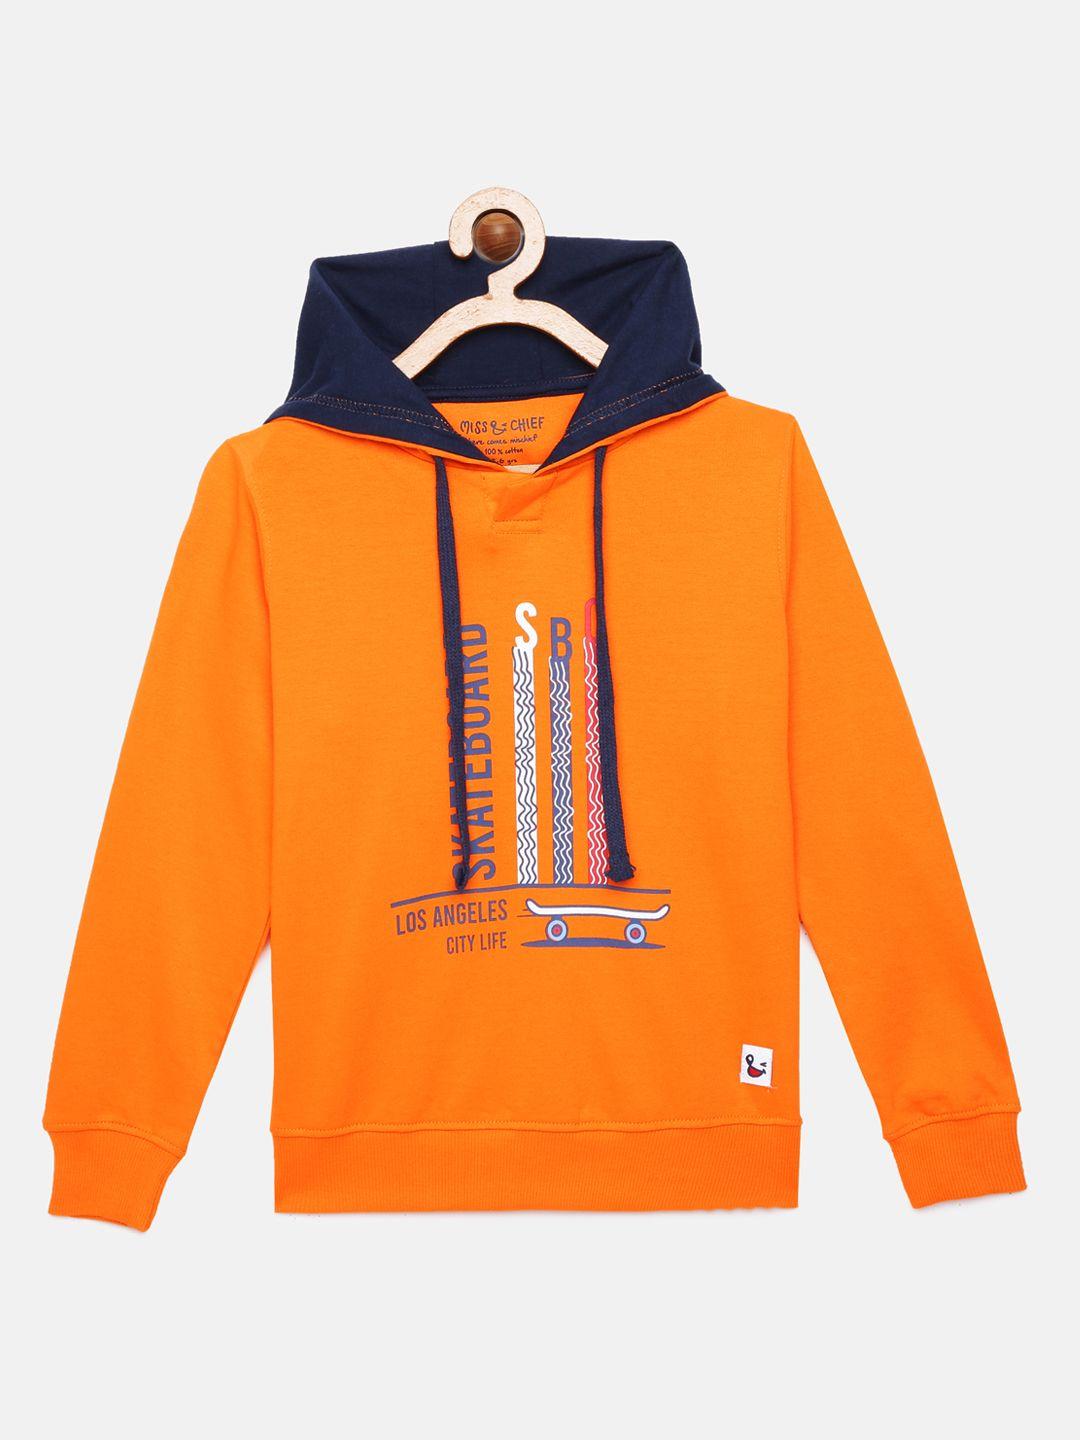 miss & chief boys orange printed pure cotton hooded sweatshirt